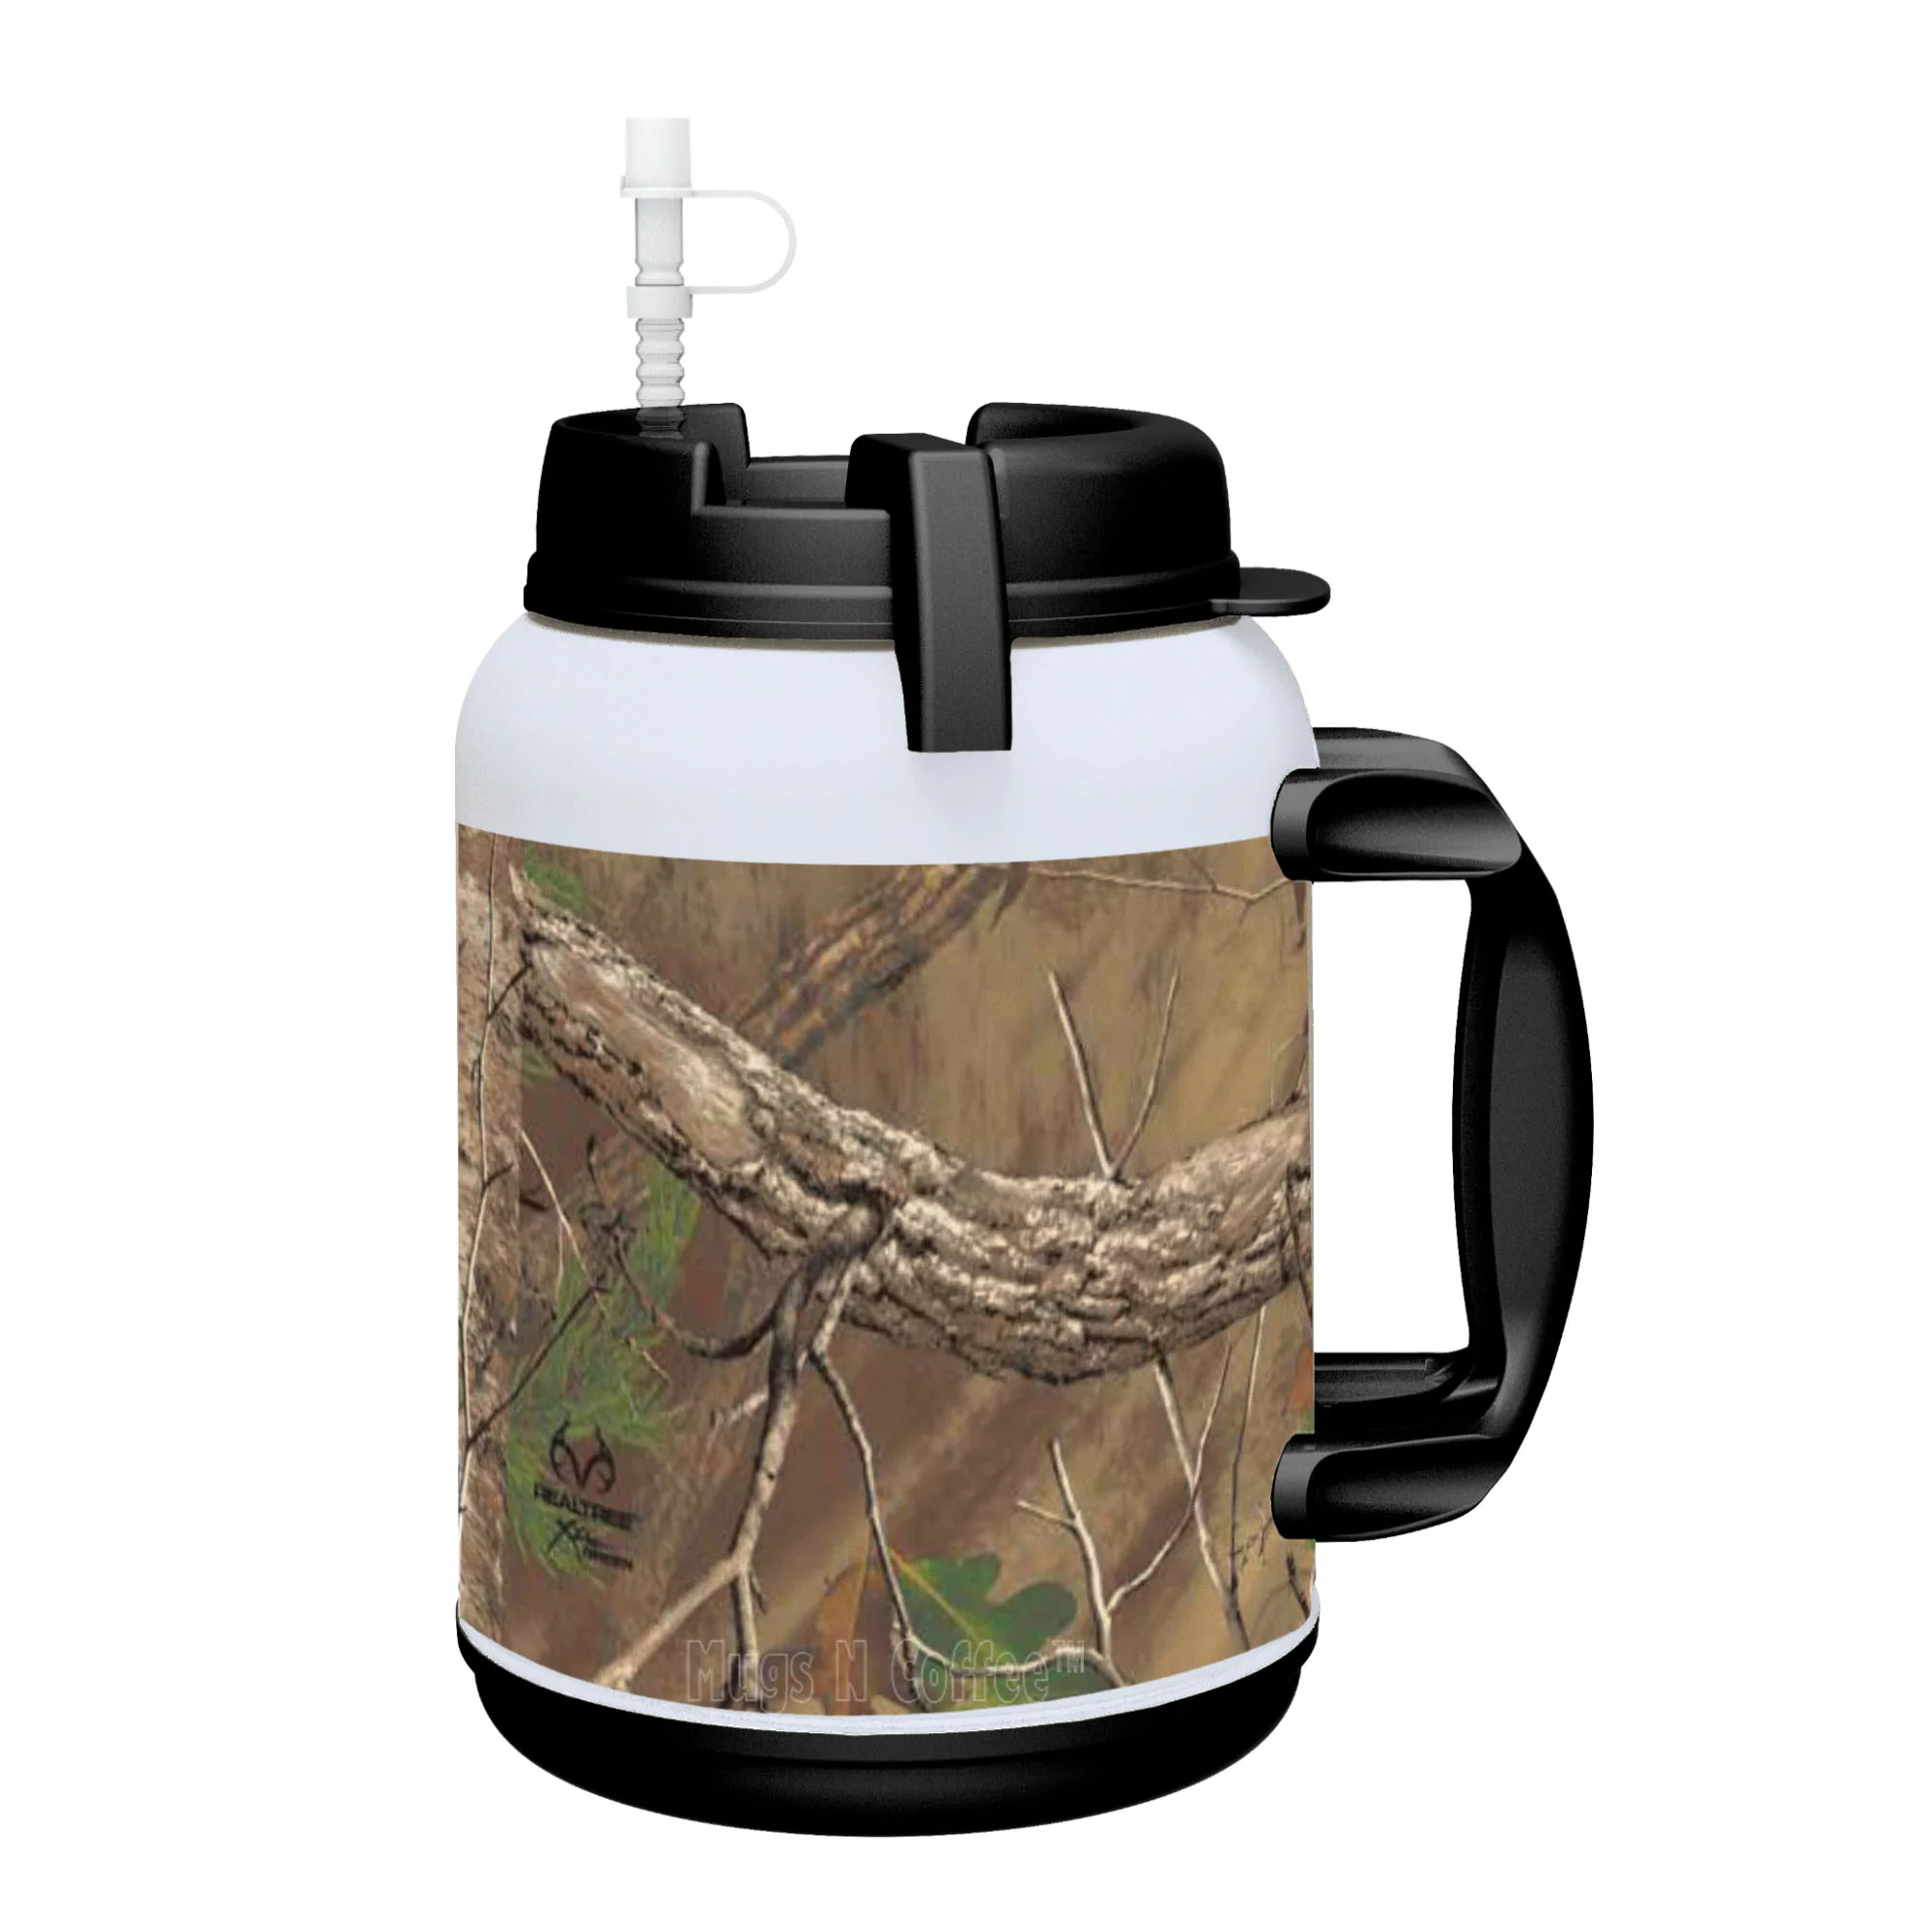 https://www.mugsncoffee.com/wp-content/uploads/2022/03/64-oz-Realtree-Insulated-Mug-Travel-Mug-with-Large-Carry-Handle-and-Straw-1-1.jpg.webp